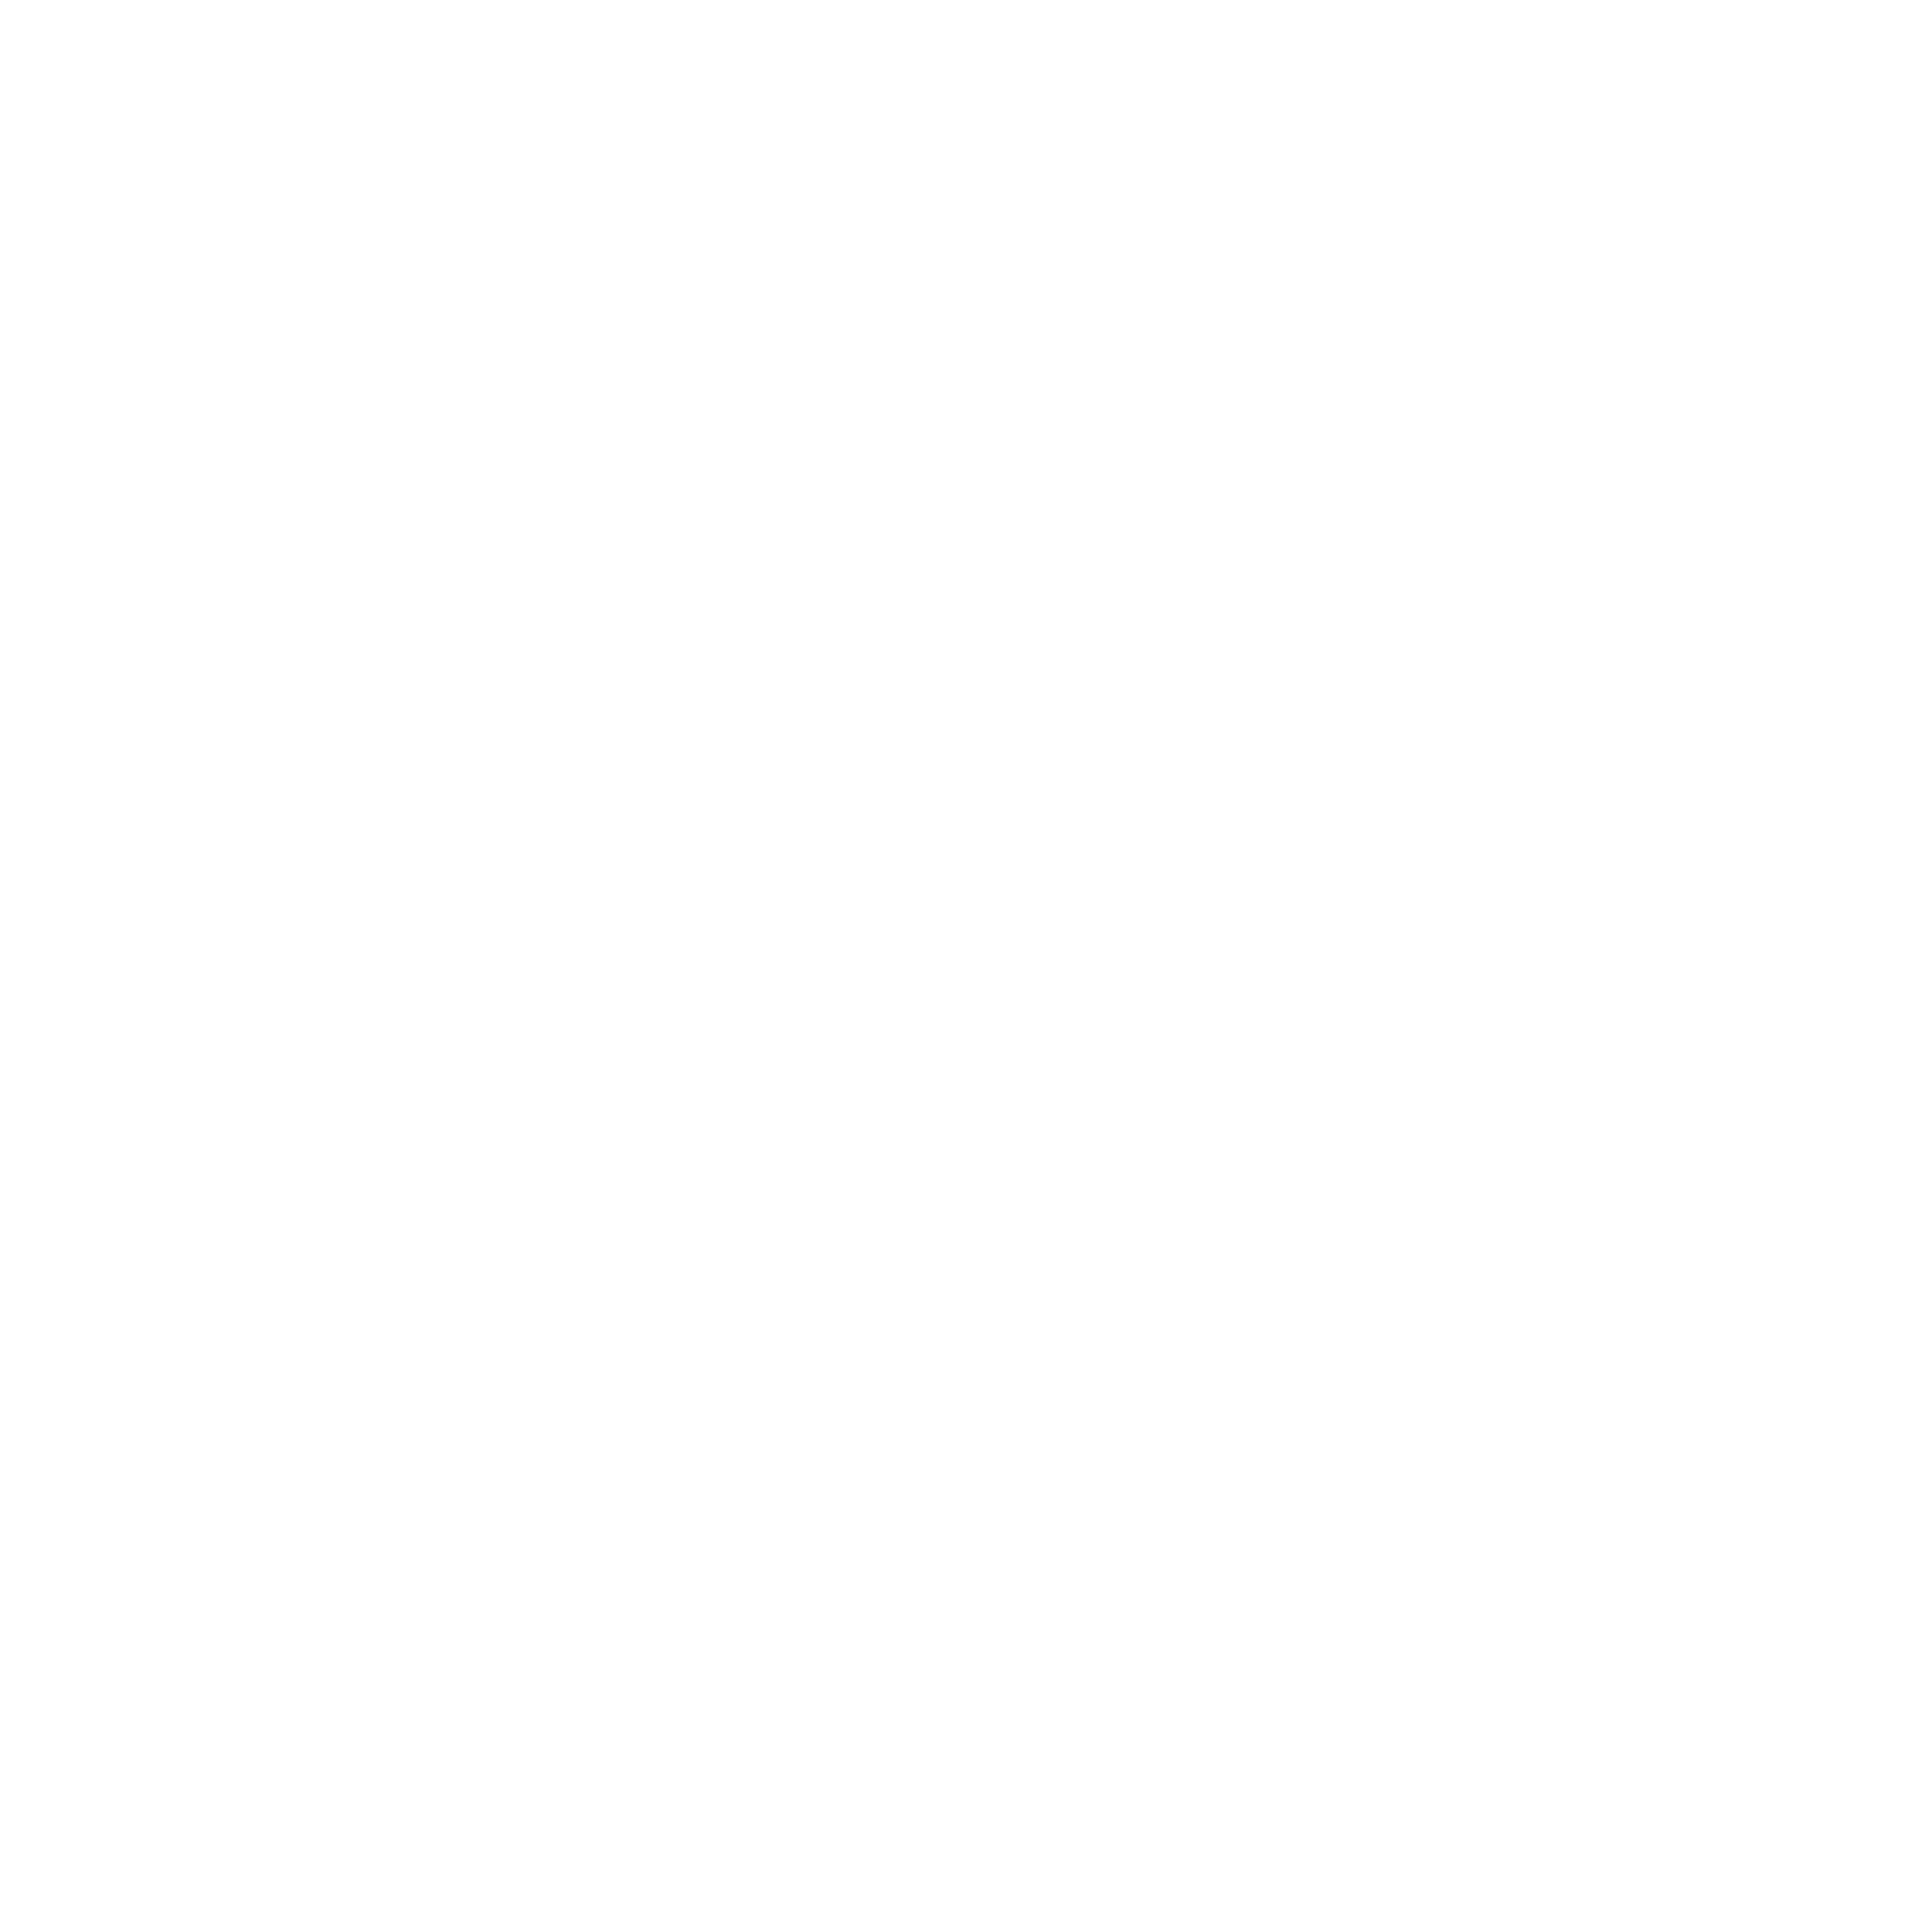 Tumblr logo, indicating that we analyze data from Tumblr.